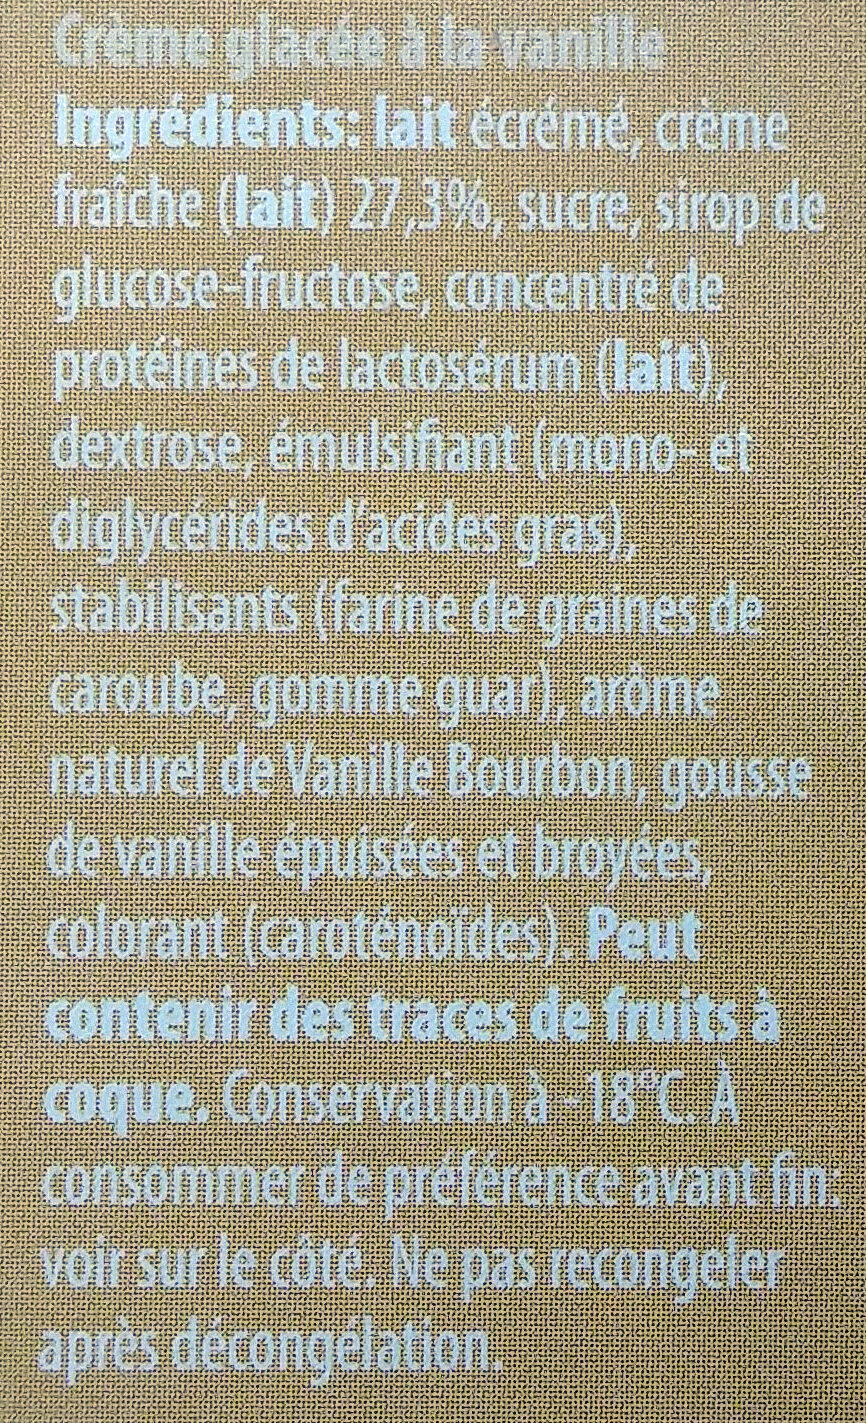 Bourbon vanille - Ingrédients